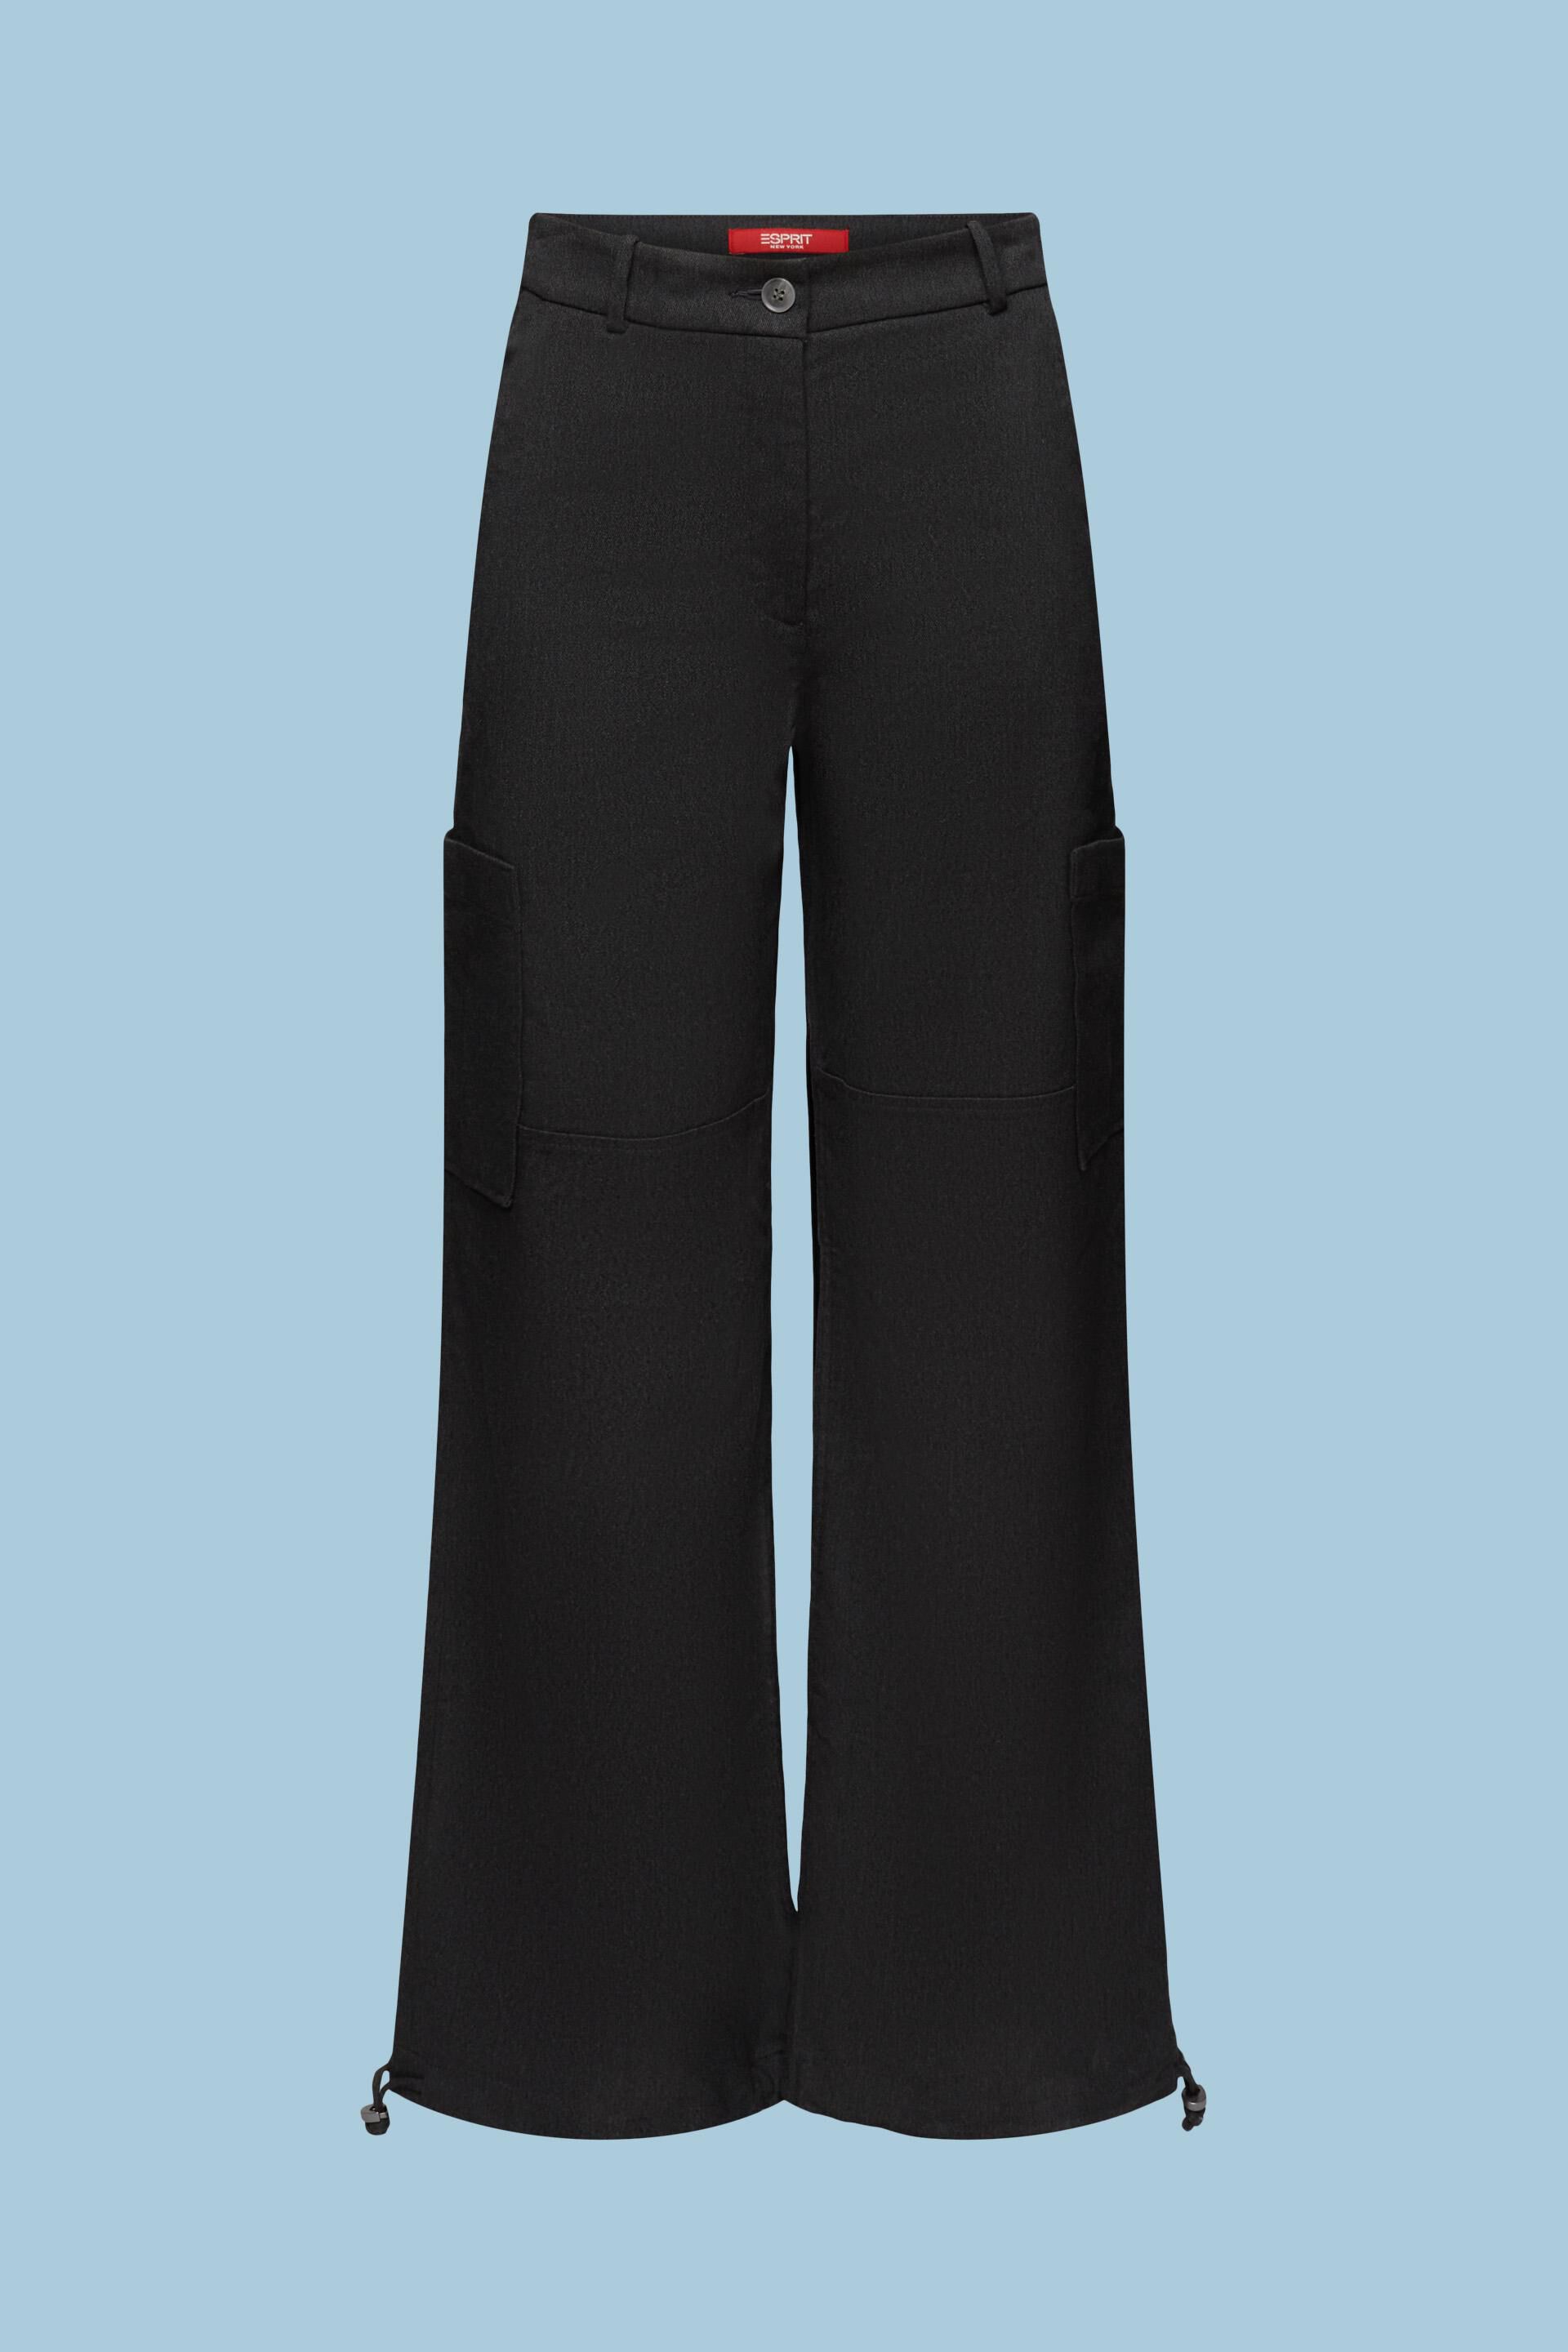 Buy Esprit Cargo Pants Light Khaki - Scandinavian Fashion Store